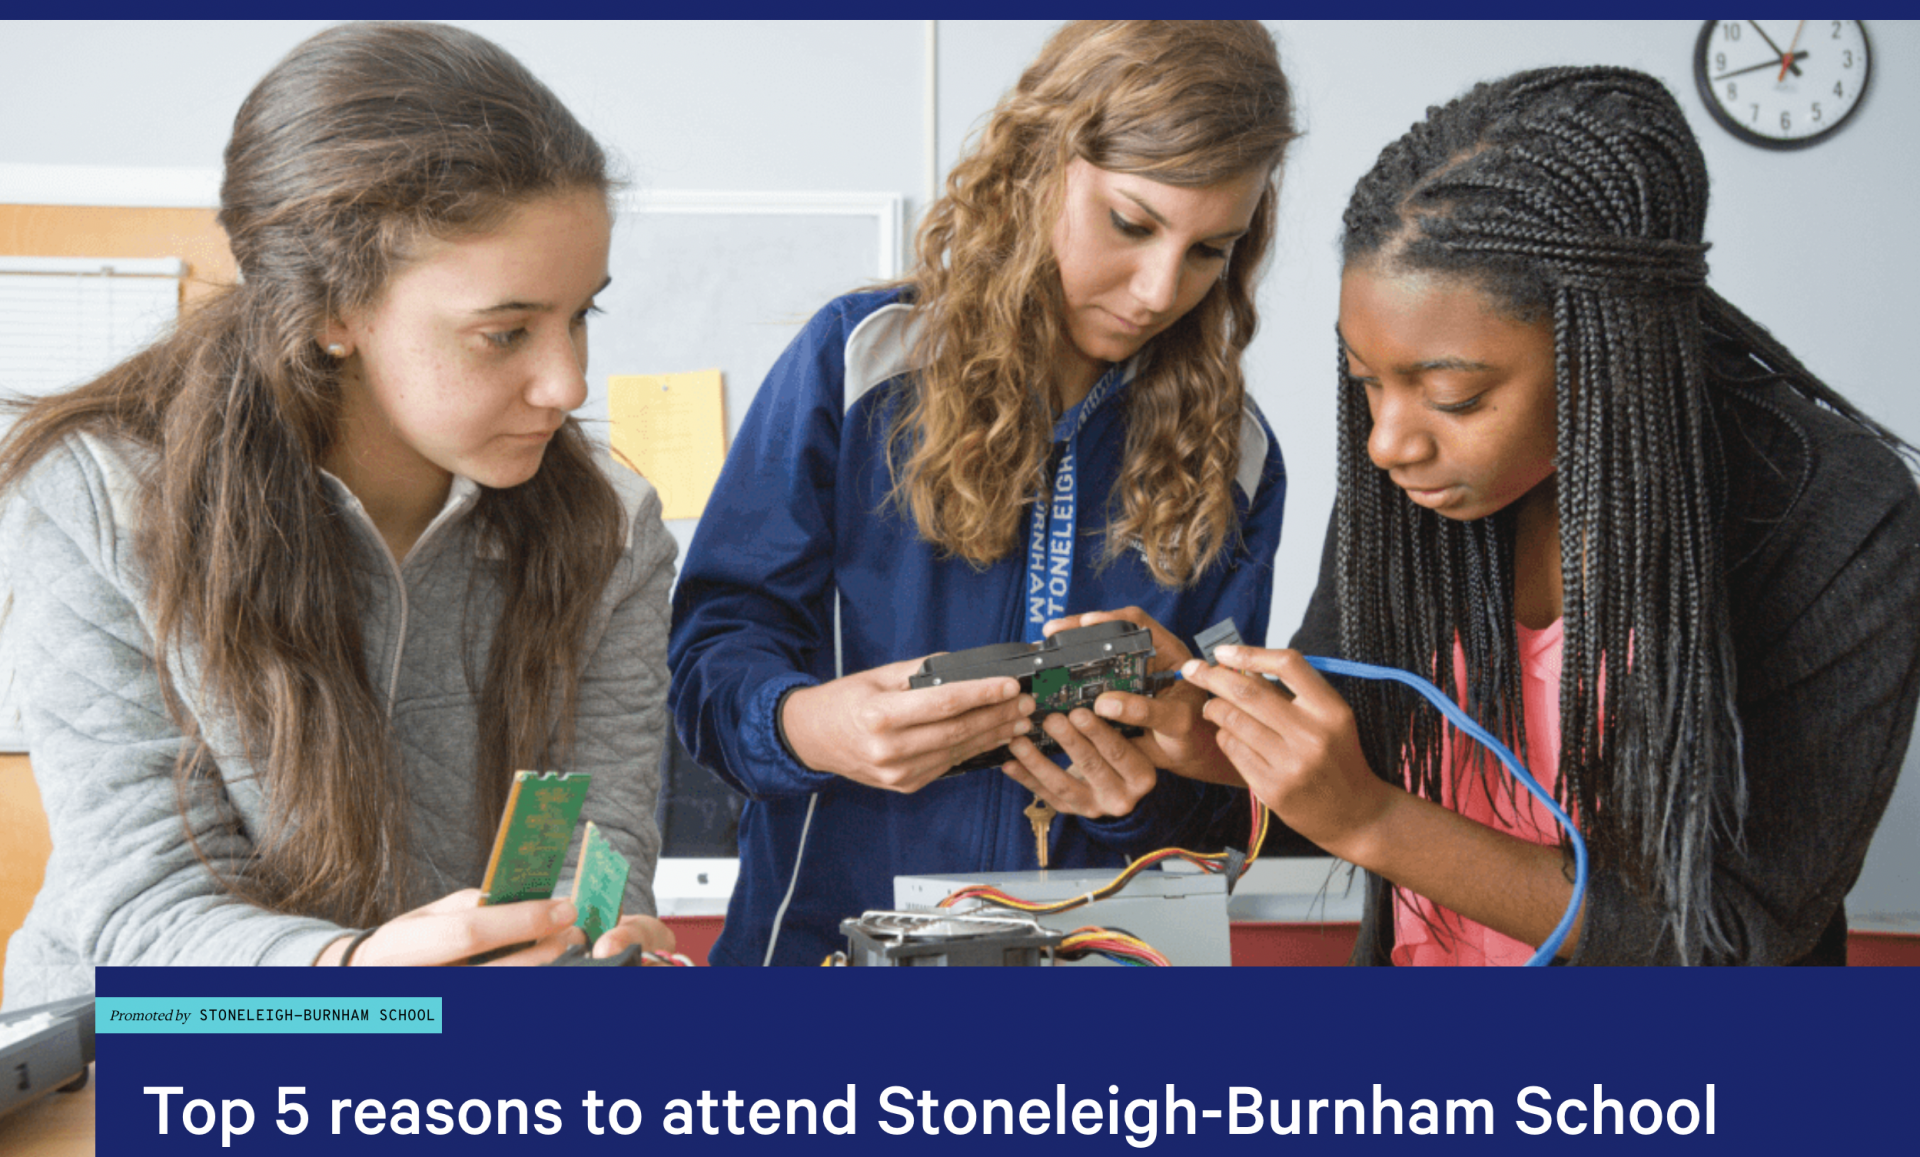 Top 5 reasons to attend Stoneleigh-Burnham School